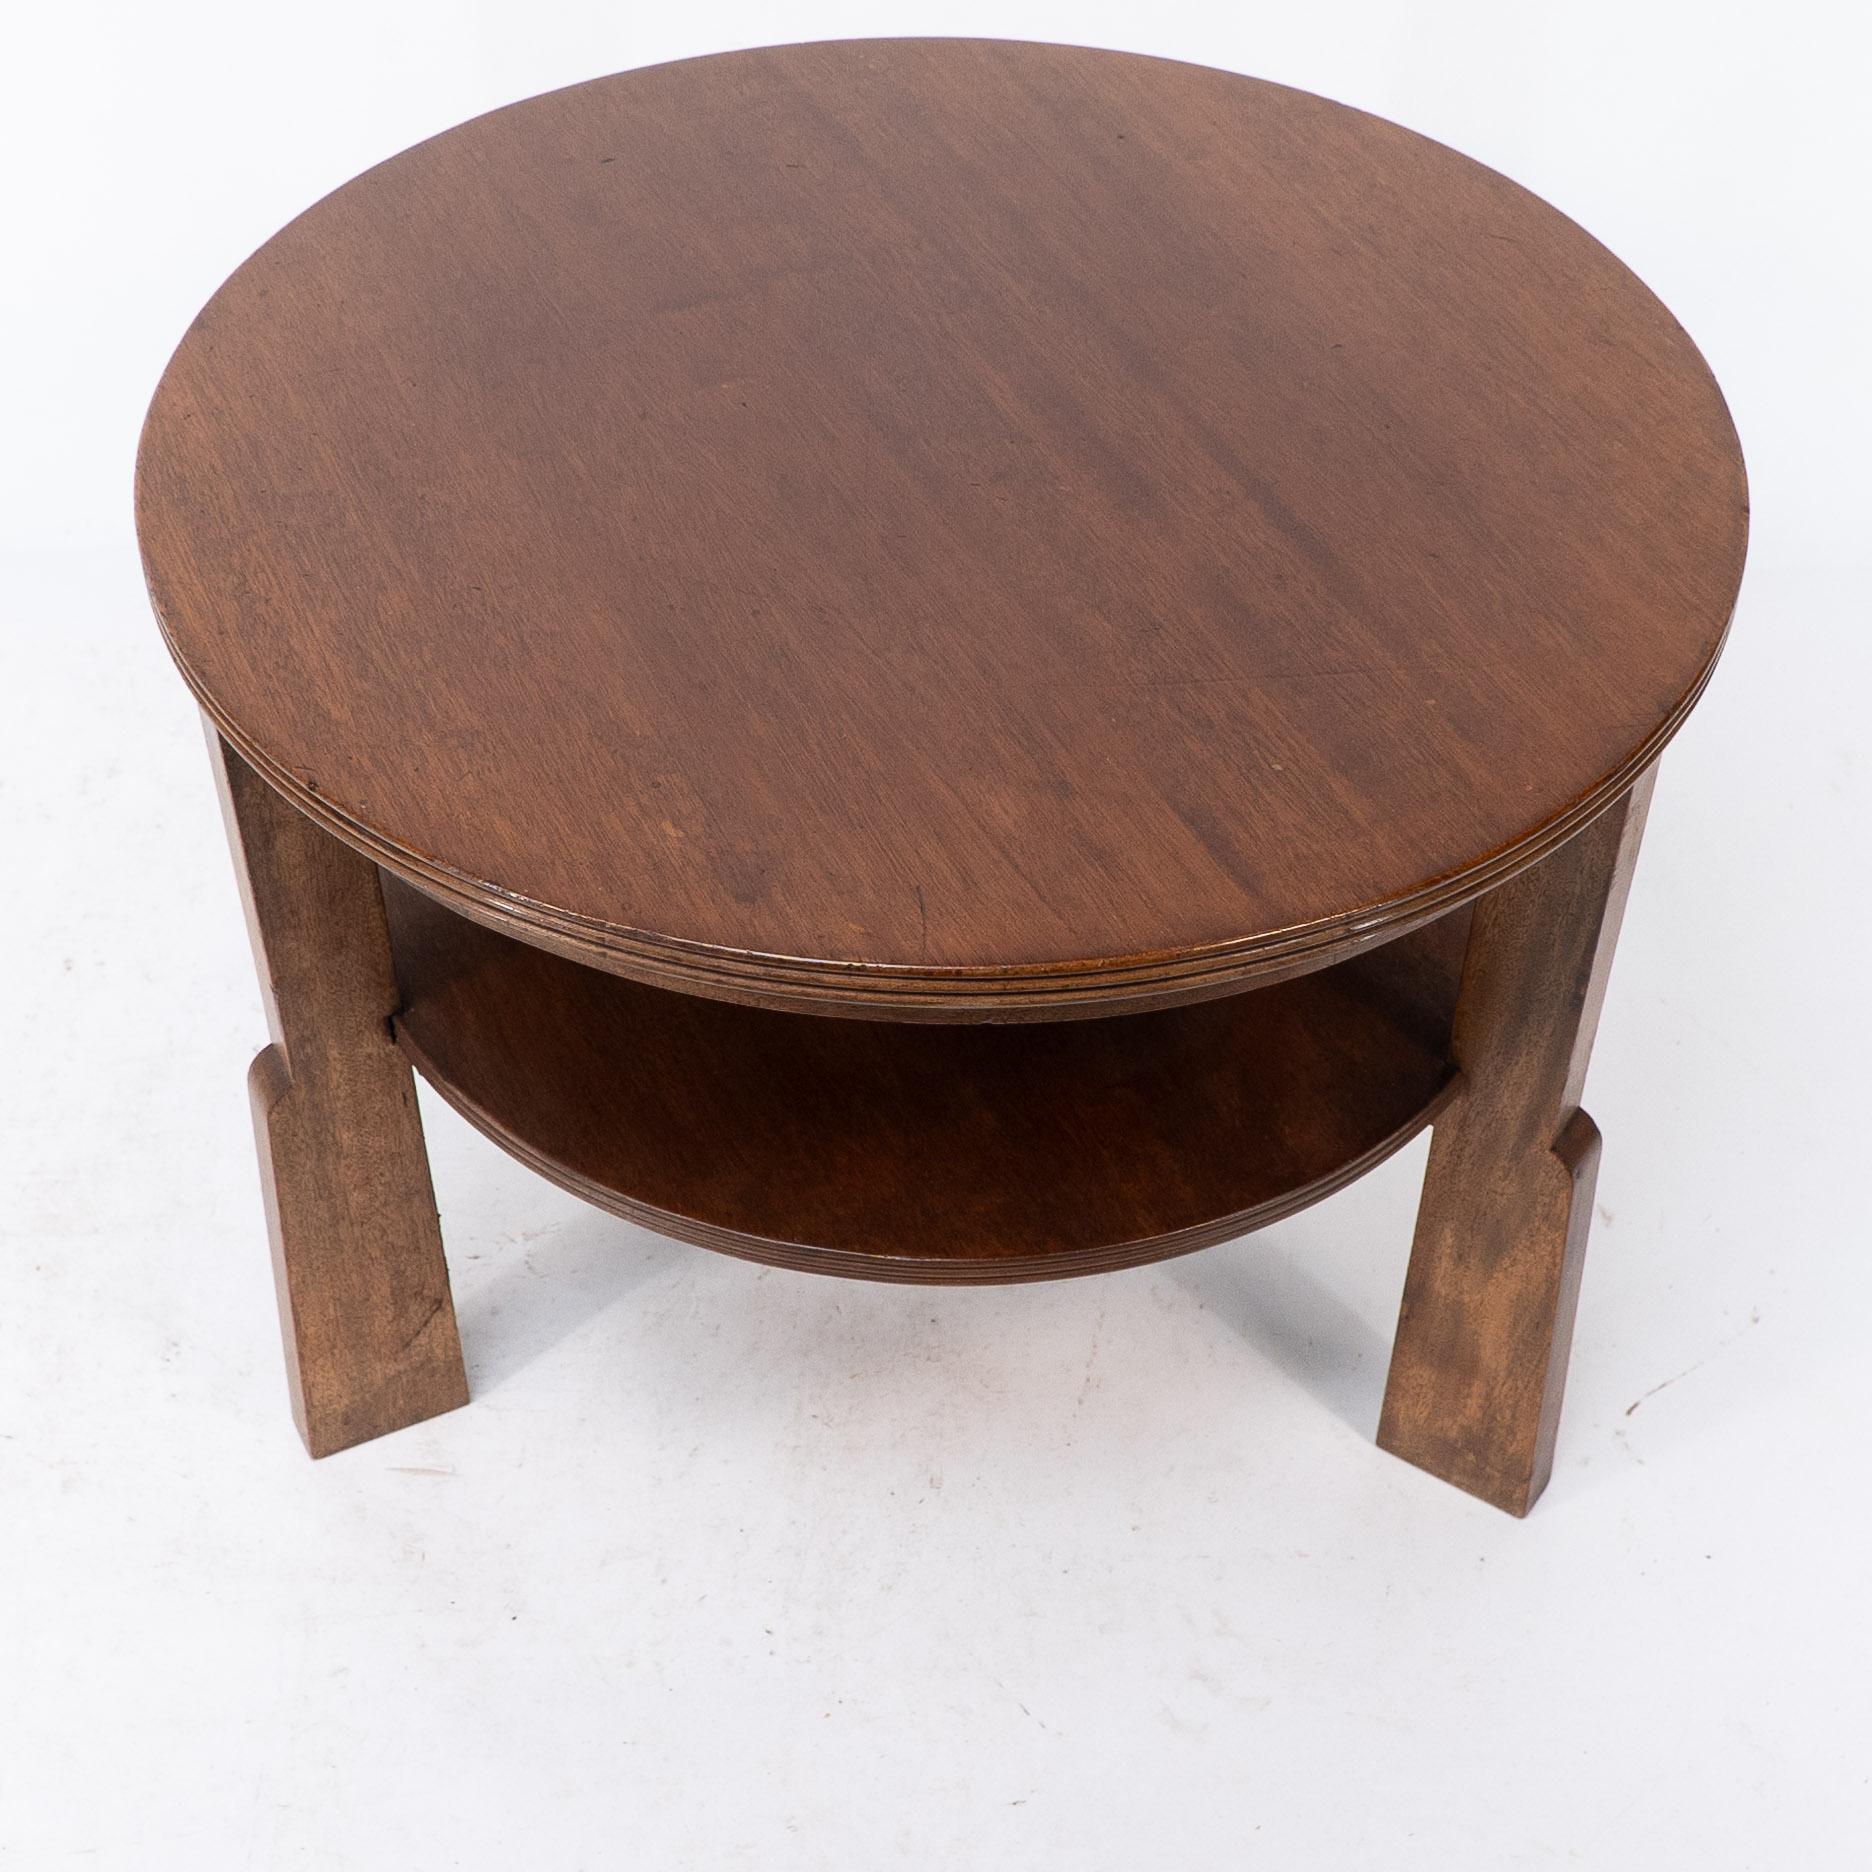 Early 20th Century Gordon Russell. A gunstock figured walnut coffee table on gunstock shaped legs